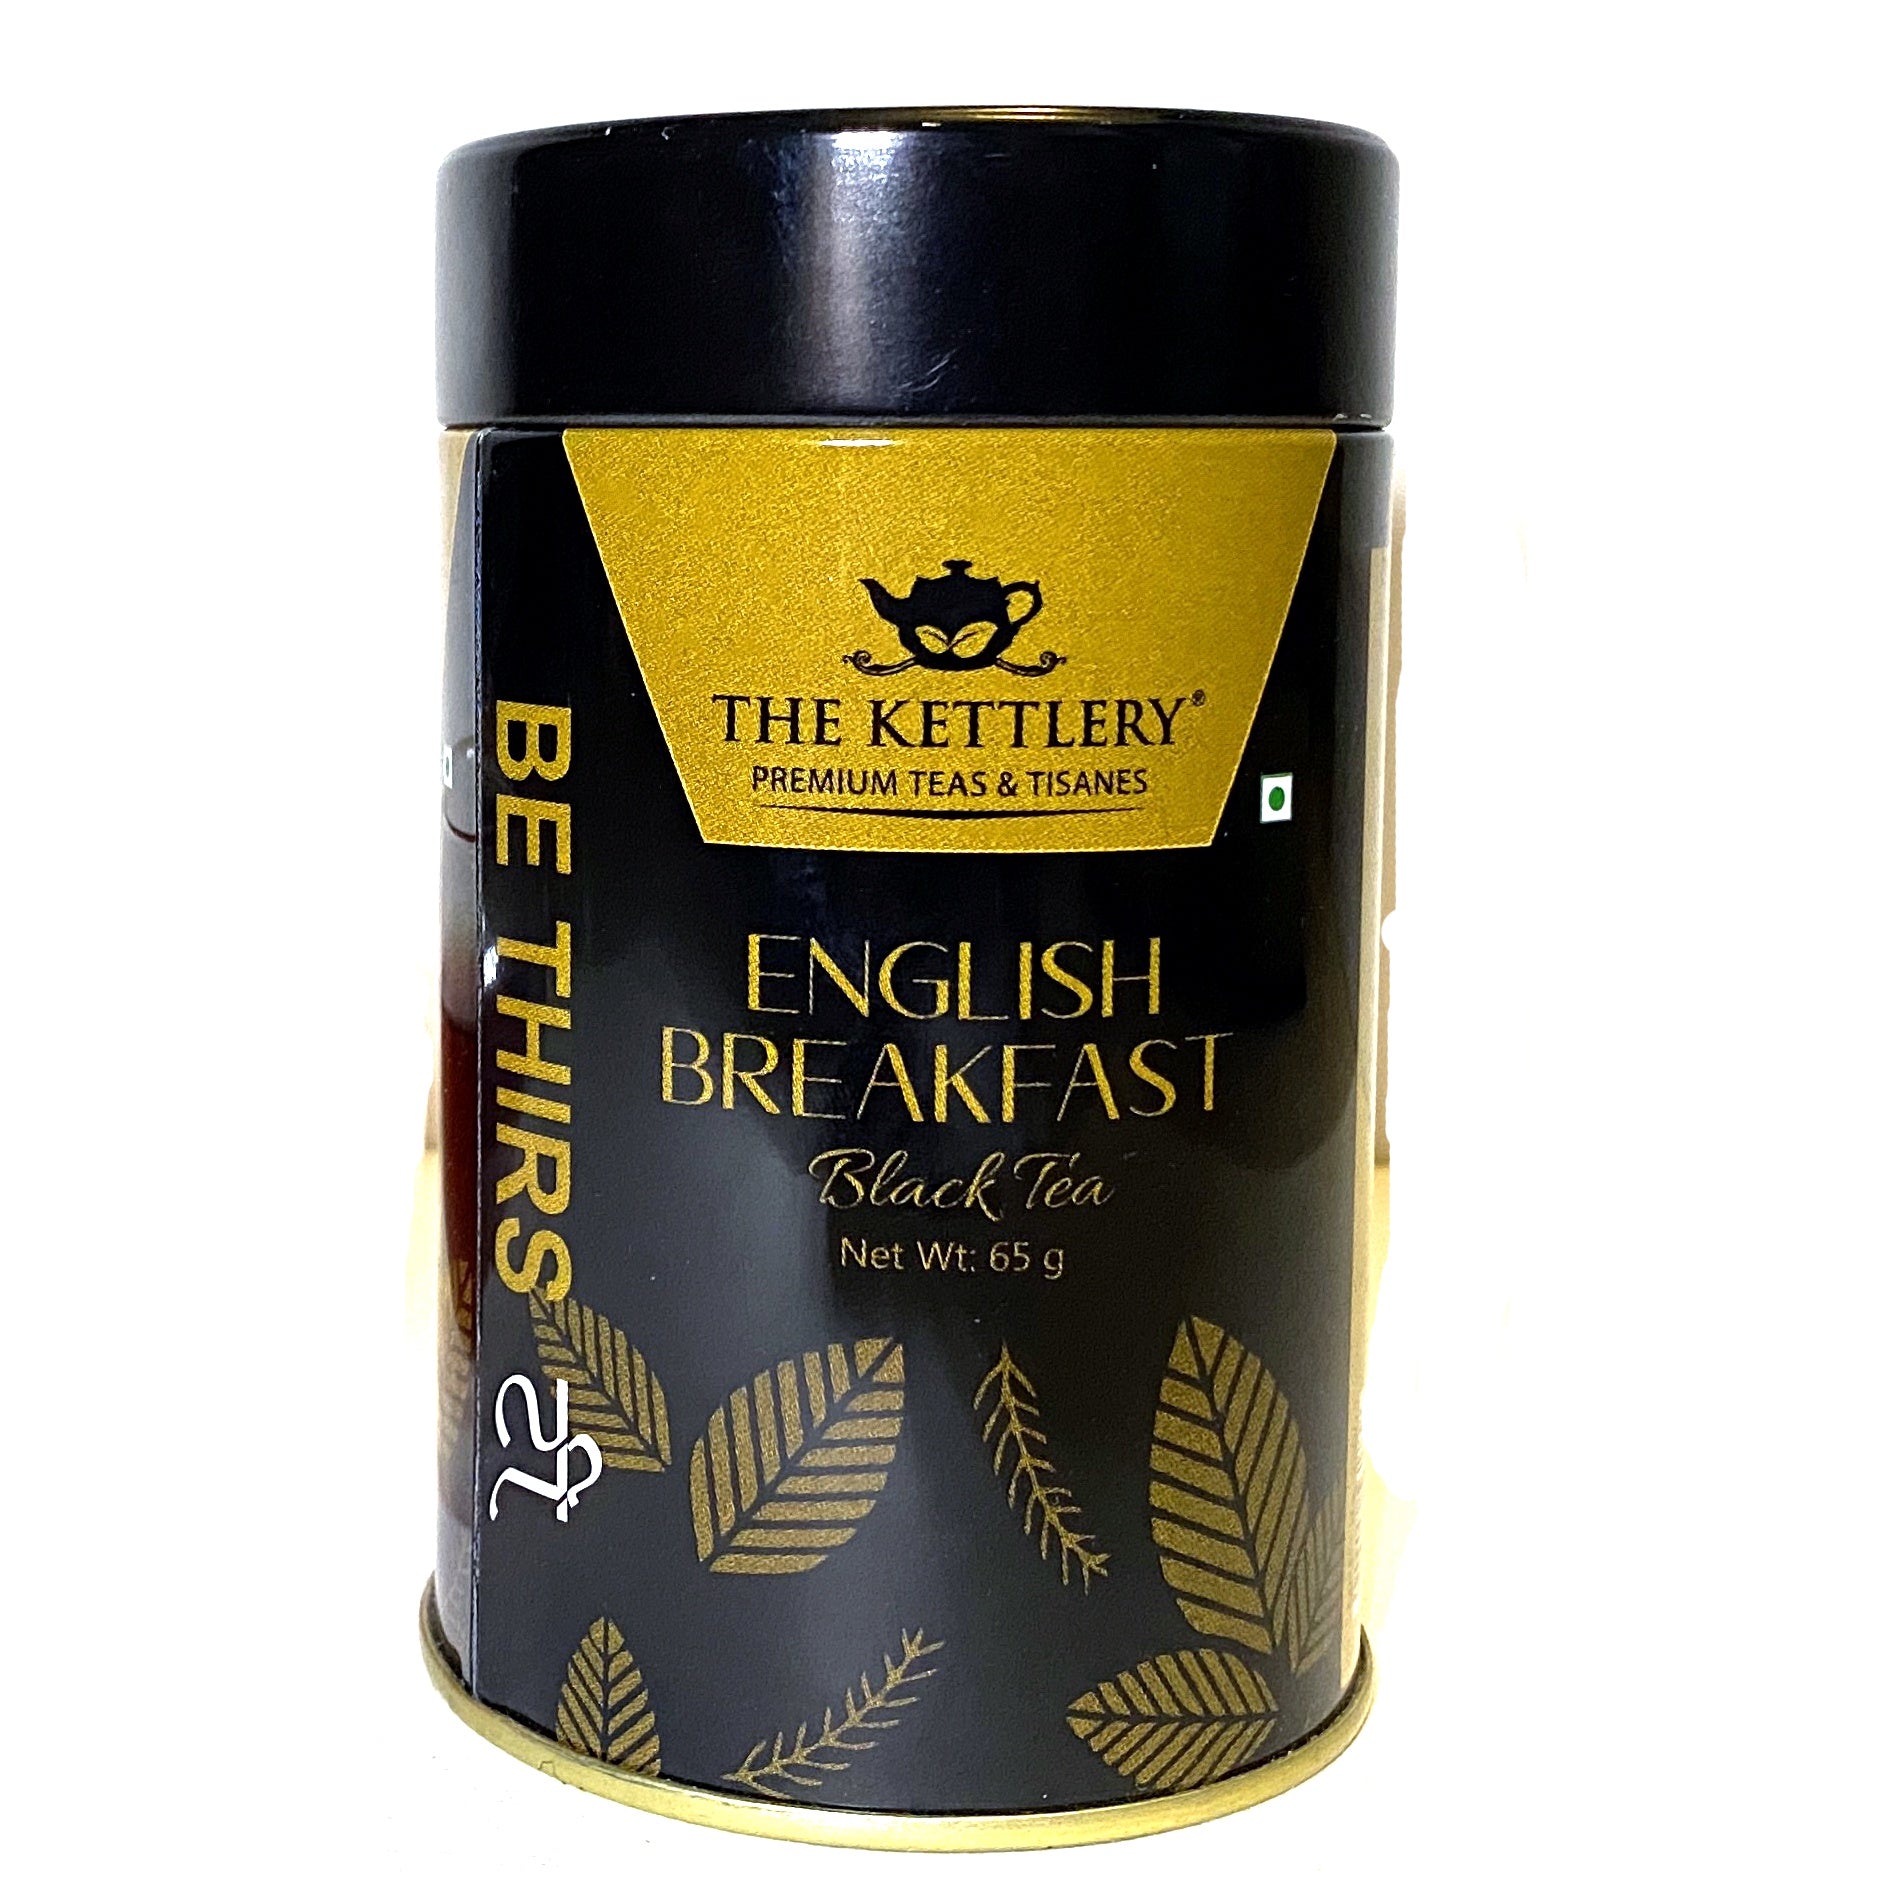 The Kettlery English Breakfast Assam Black Tea Tin, 65 g